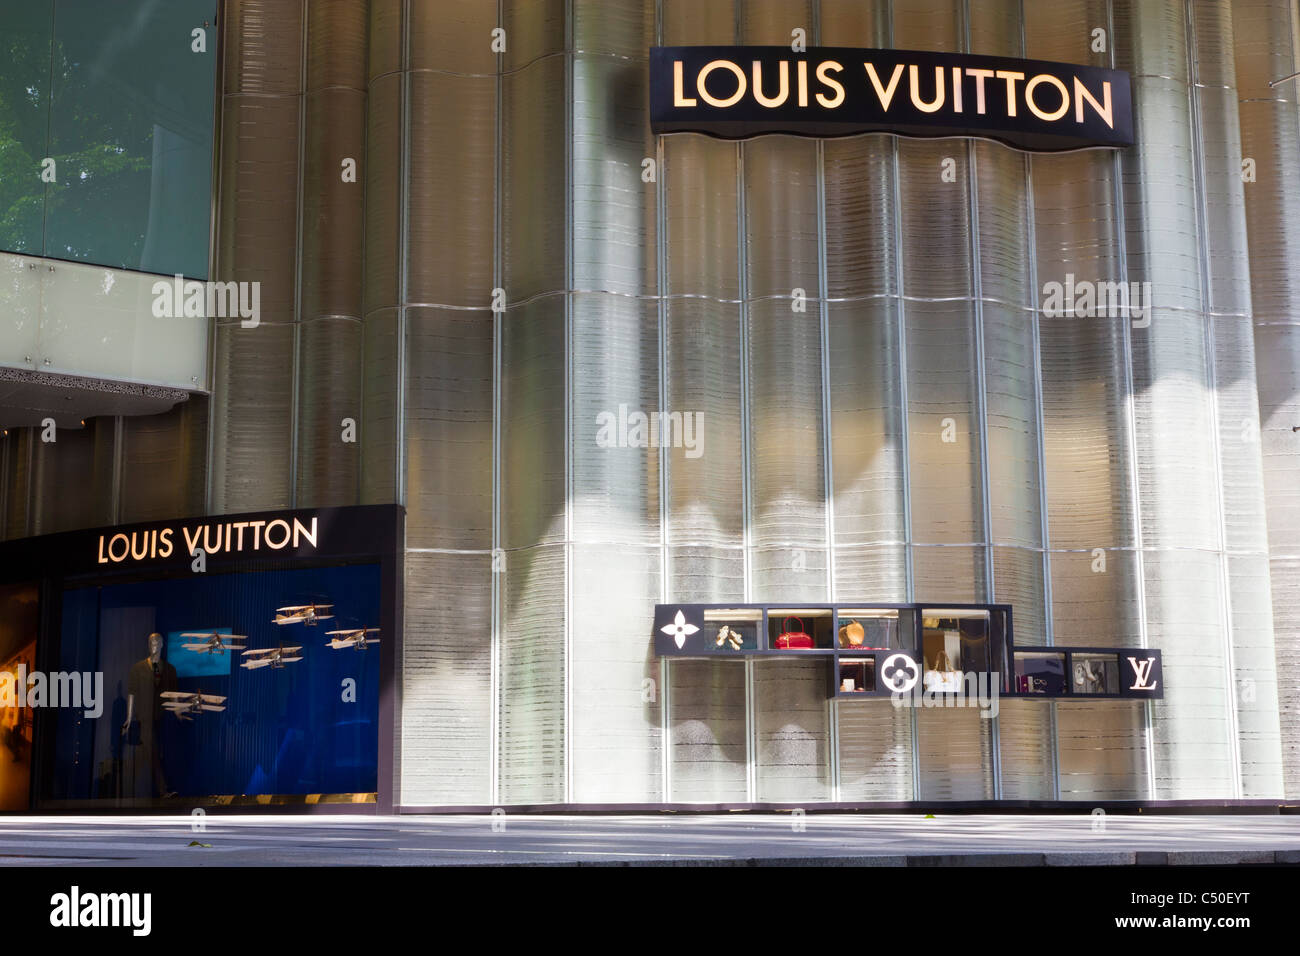 Louis Vuitton's shop in Singapore's ION Shopping Centre Stock Photo